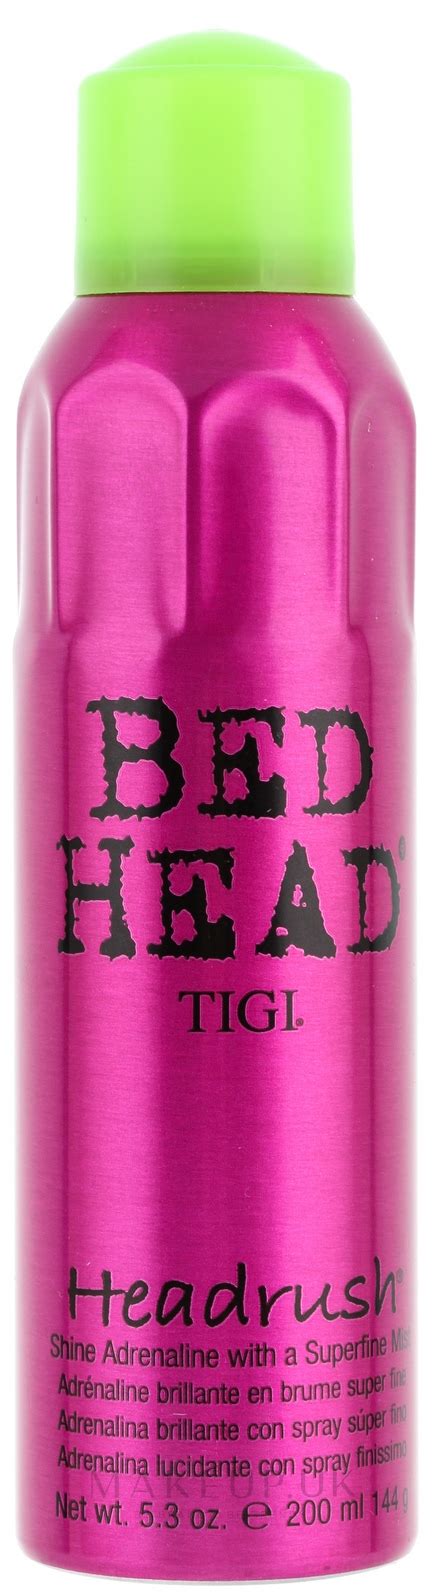 Tigi Bed Head Biggie Headrush Hair Spray Intensive Shine Hair Spray